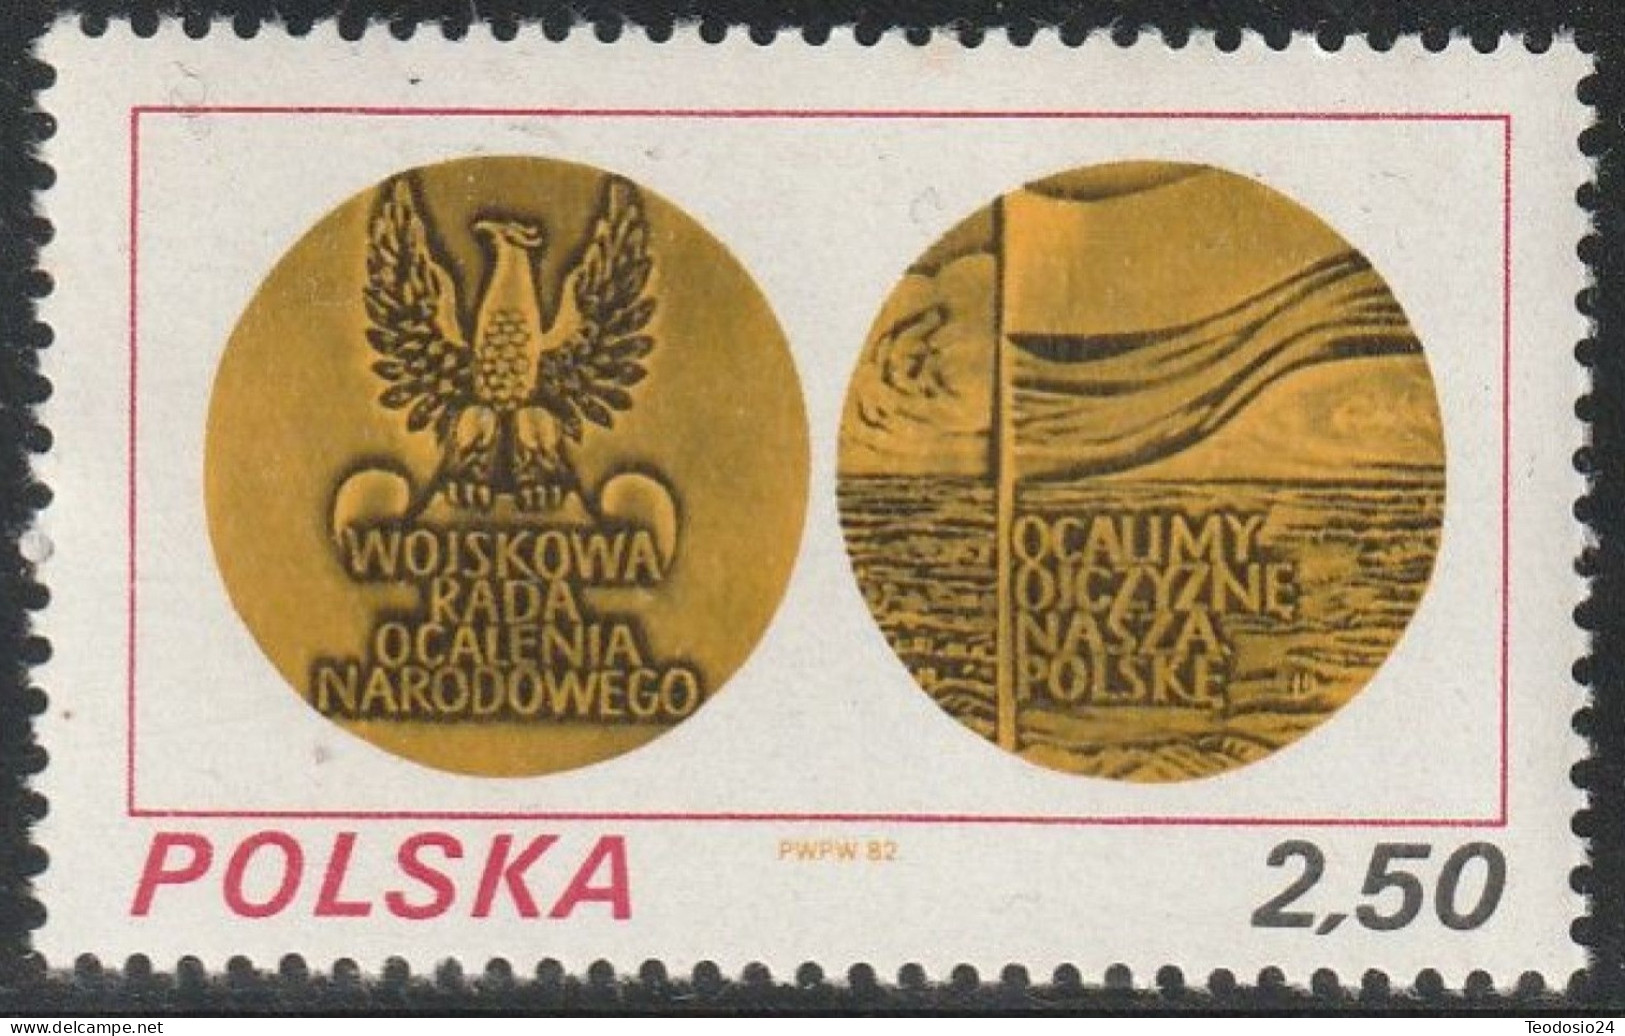 POLAND 1982 2654 ** - Unused Stamps